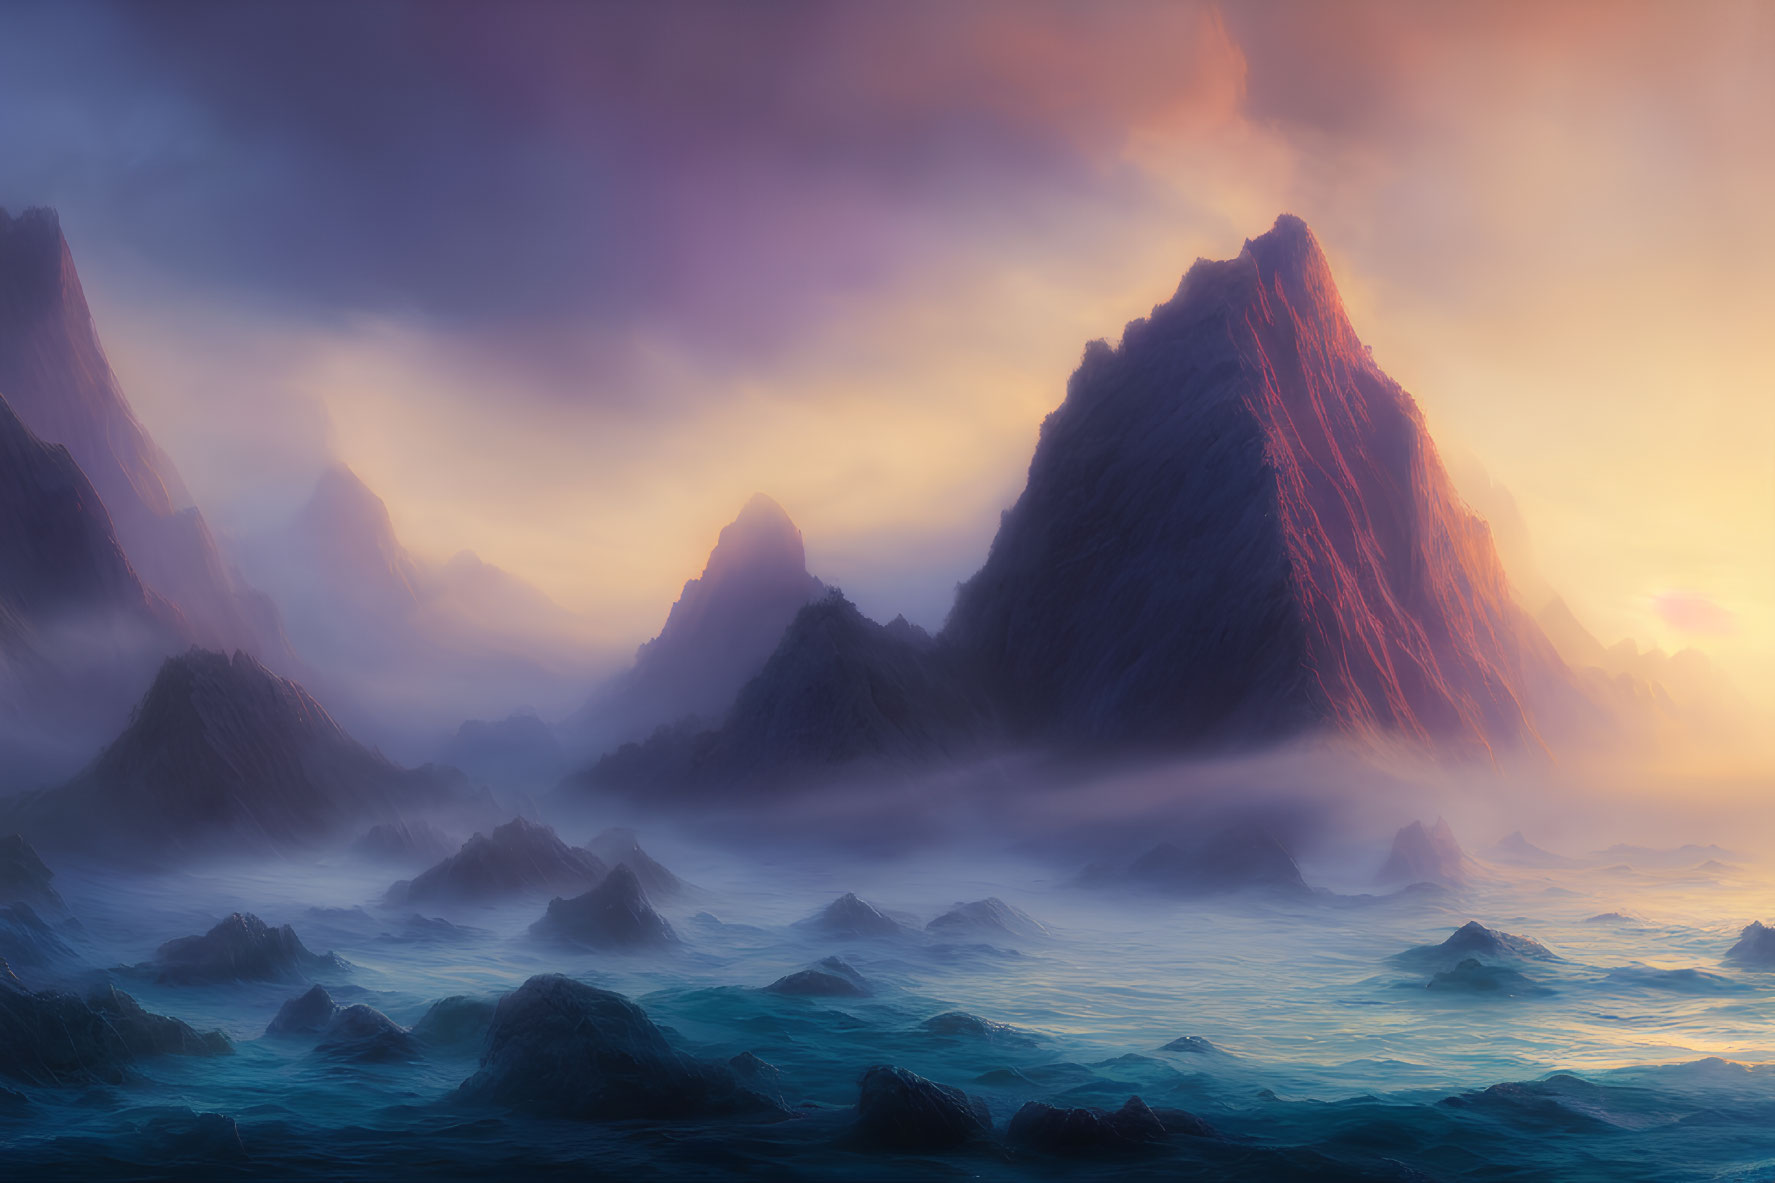 Tranquil digital artwork of misty mountains over dusky sea